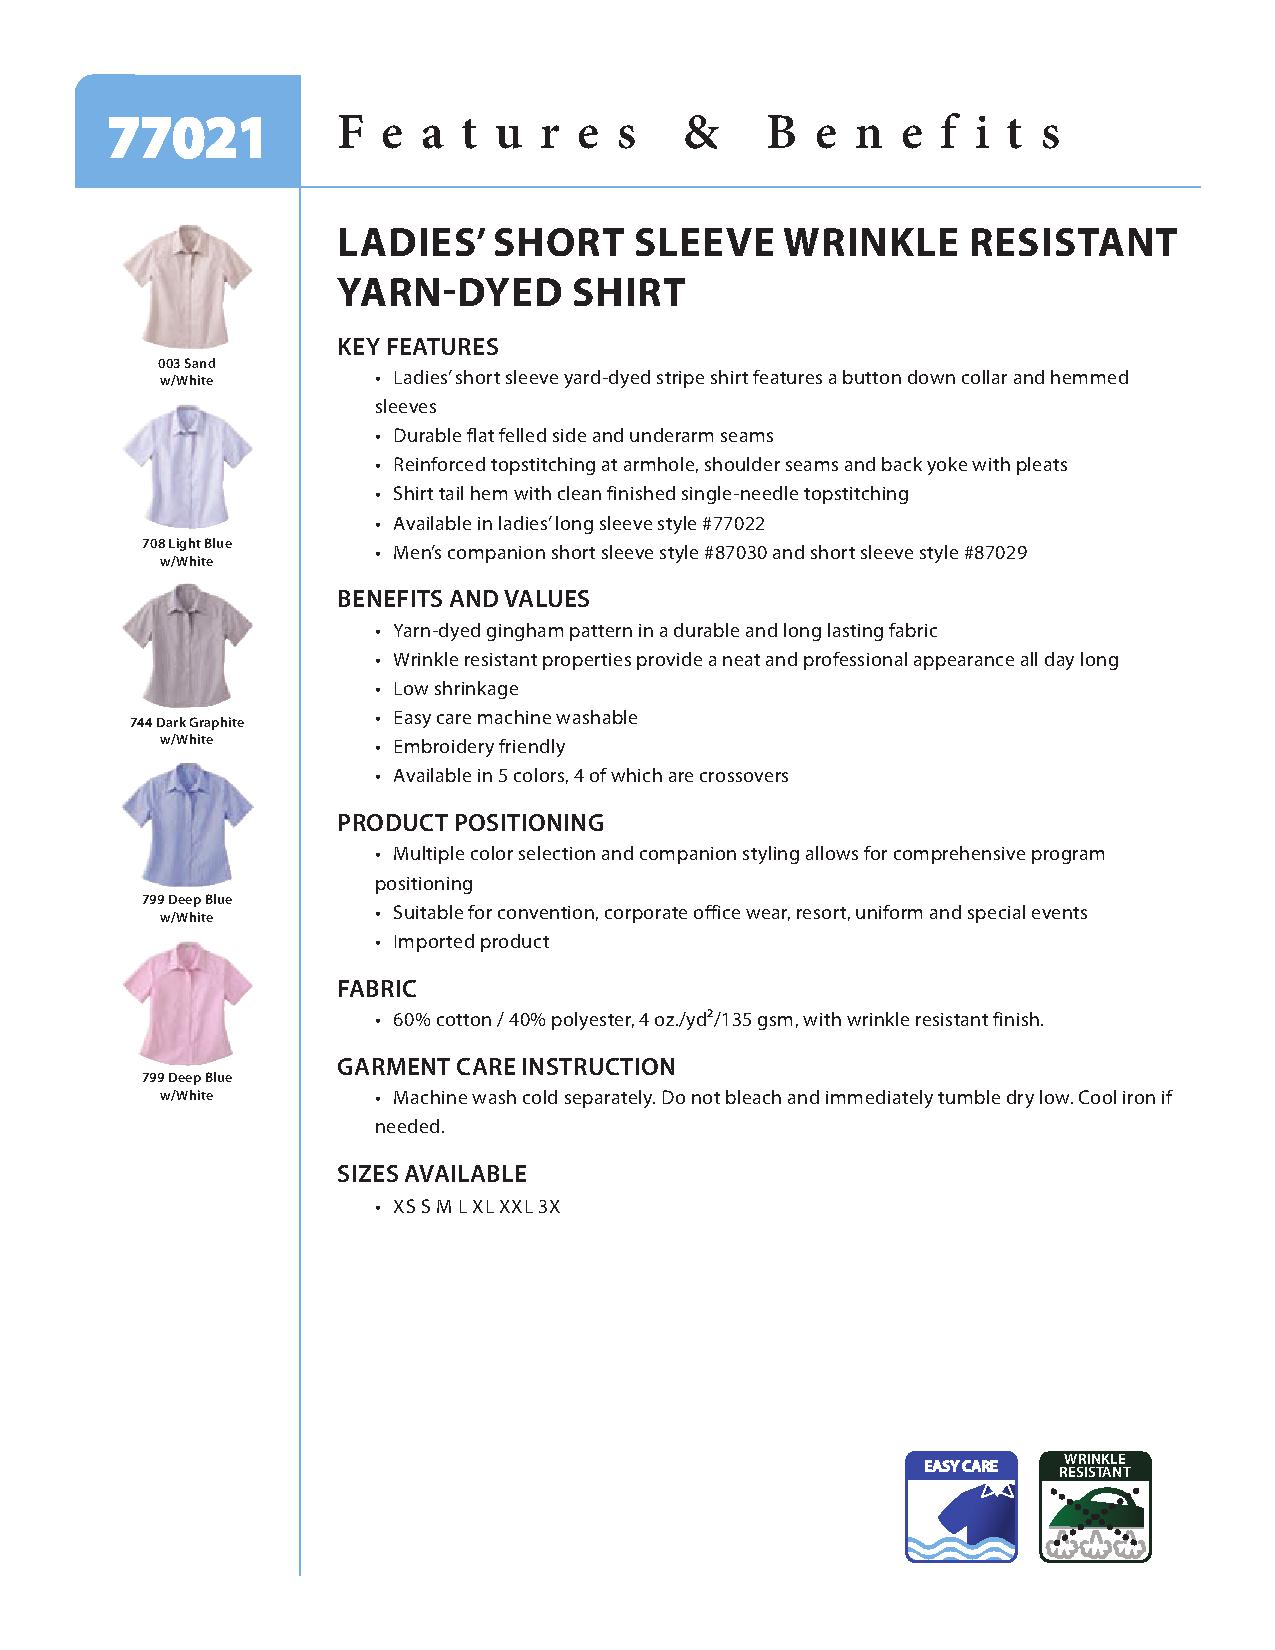 Ash City Easy care 77021 - Ladies' Short Sleeve Wrinkle Resistant Yarn-Dyed Shirt